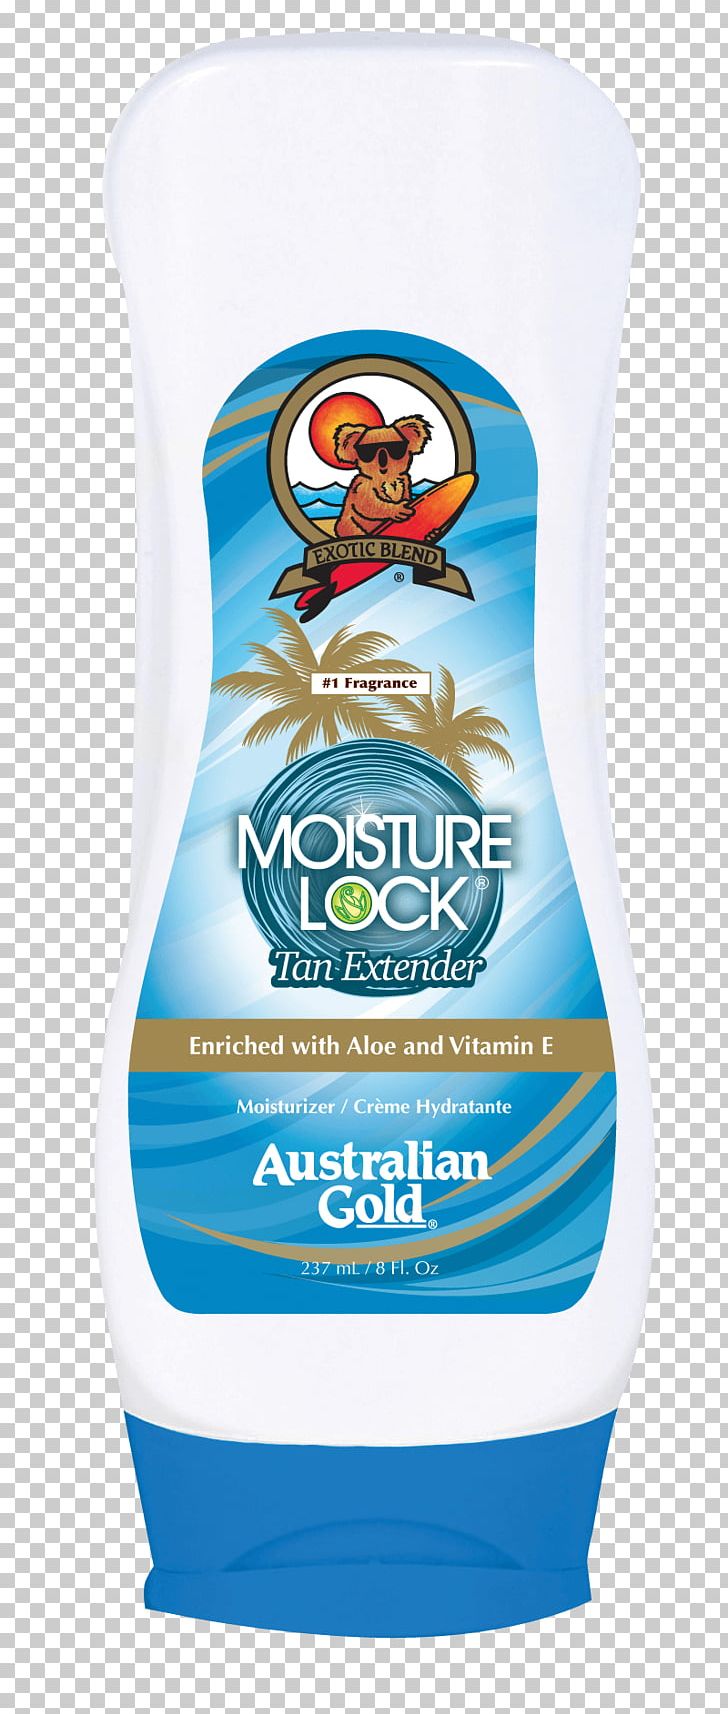 Grøn baggrund Bluebell Premonition Indoor Tanning Lotion Sunscreen Sun Tanning Australian Gold Moisture Lock  Tan Extender PNG, Clipart, Aftersun, Aloe